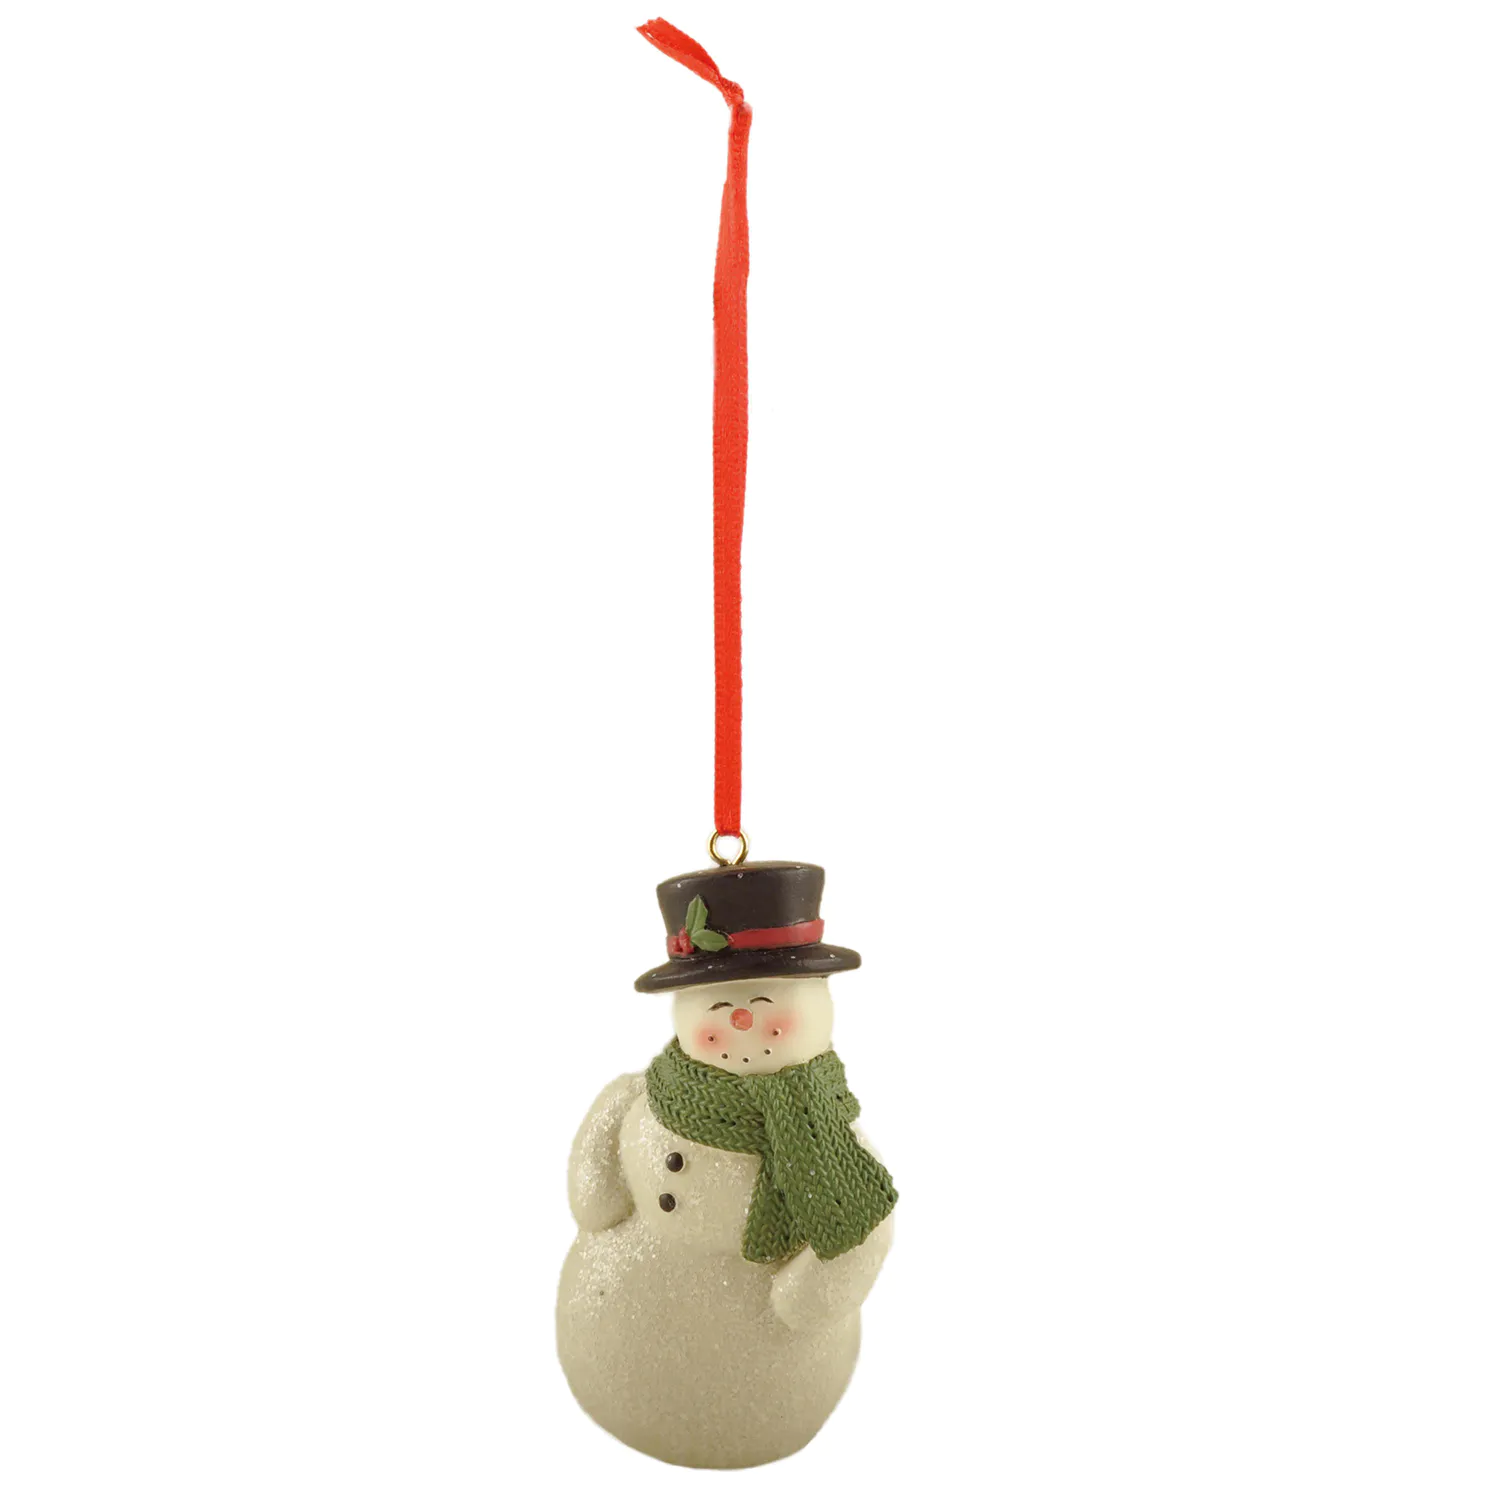 New Design Resin Christmas Ornament Snowman w Green Scarf Christmas Ornament for Home Decor 238-52131